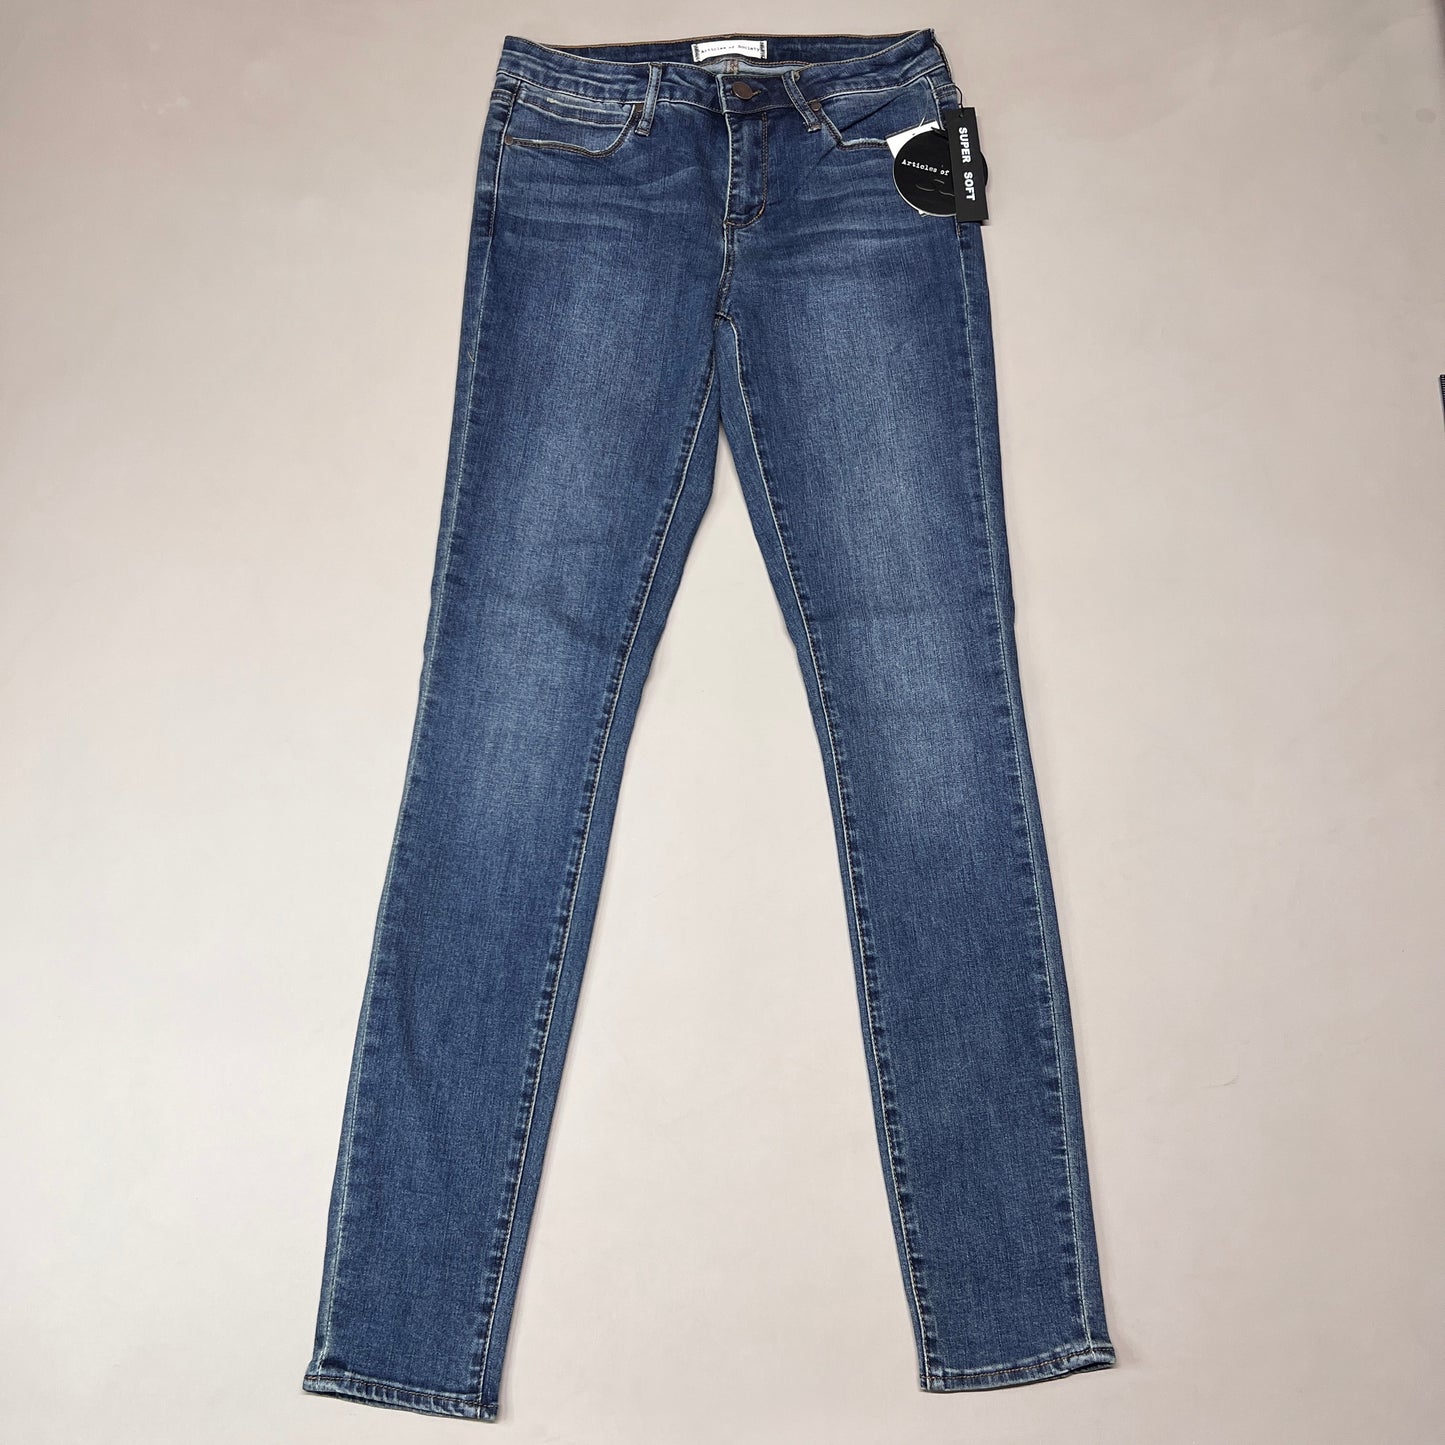 ARTICLES OF SOCIETY Aiea Denim Jeans Women's Sz 27 Blue 5352PLV-701 (New)